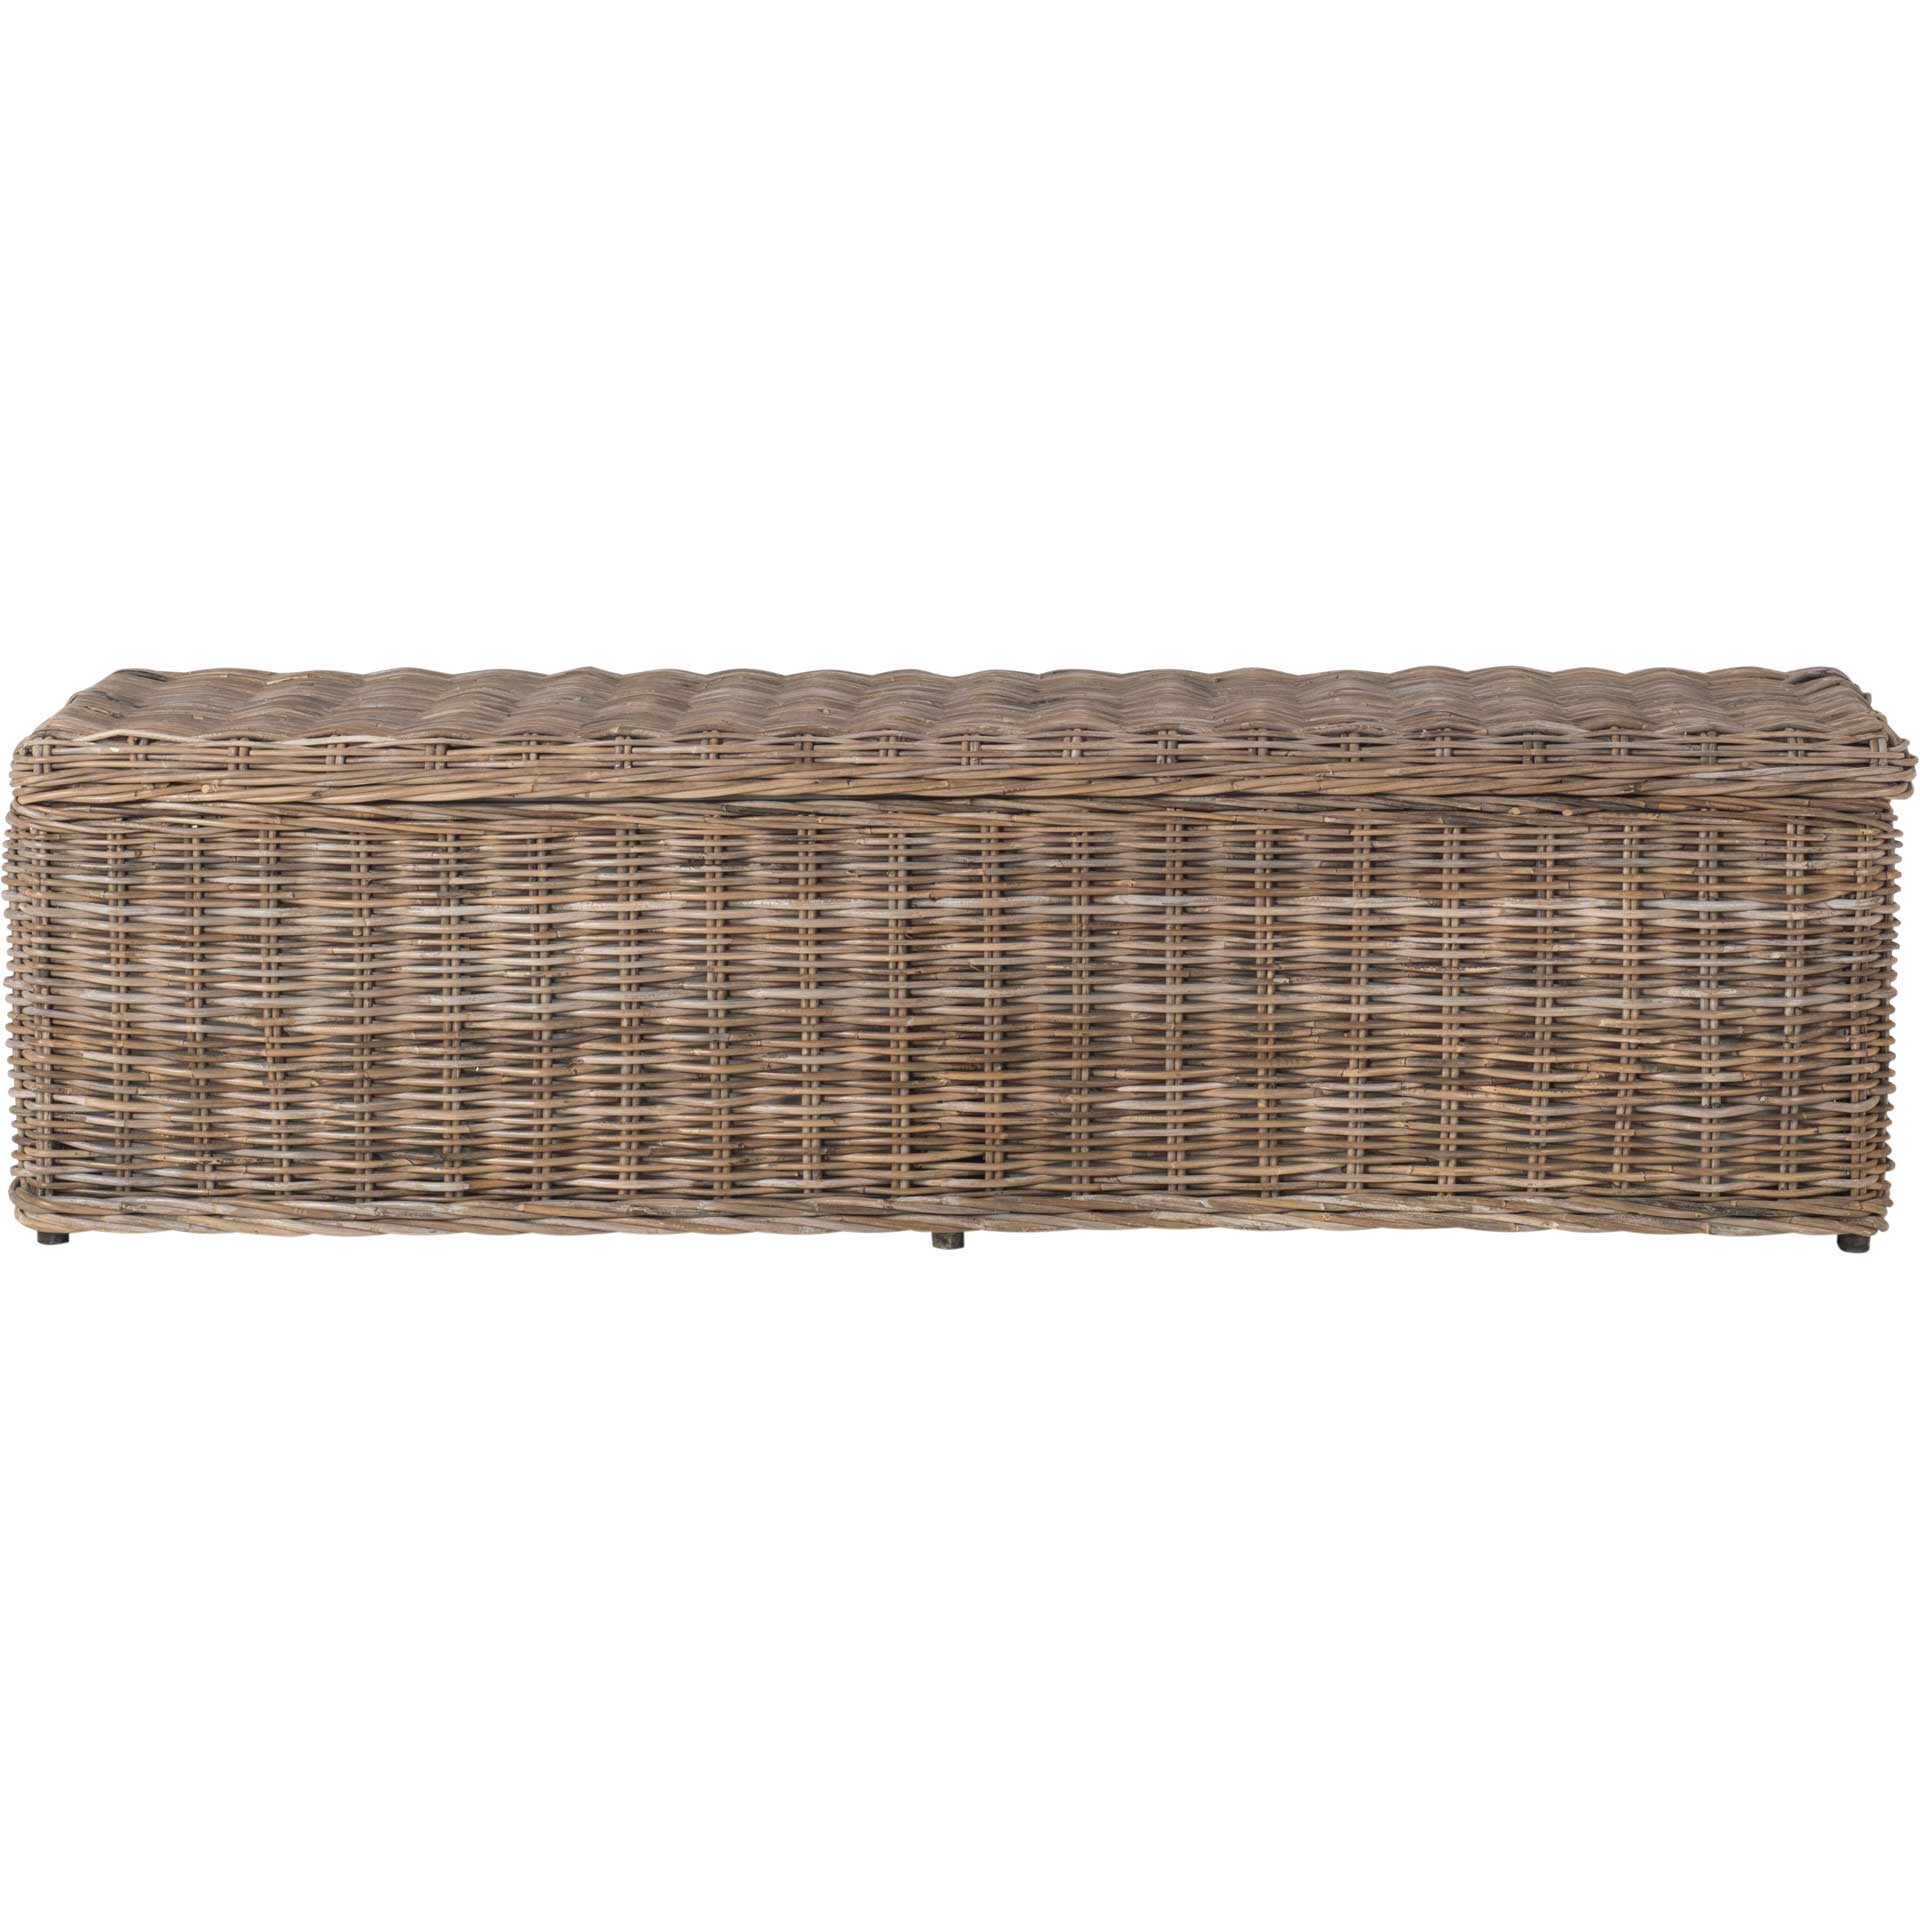 Caine Wicker Bench With Storage Gray